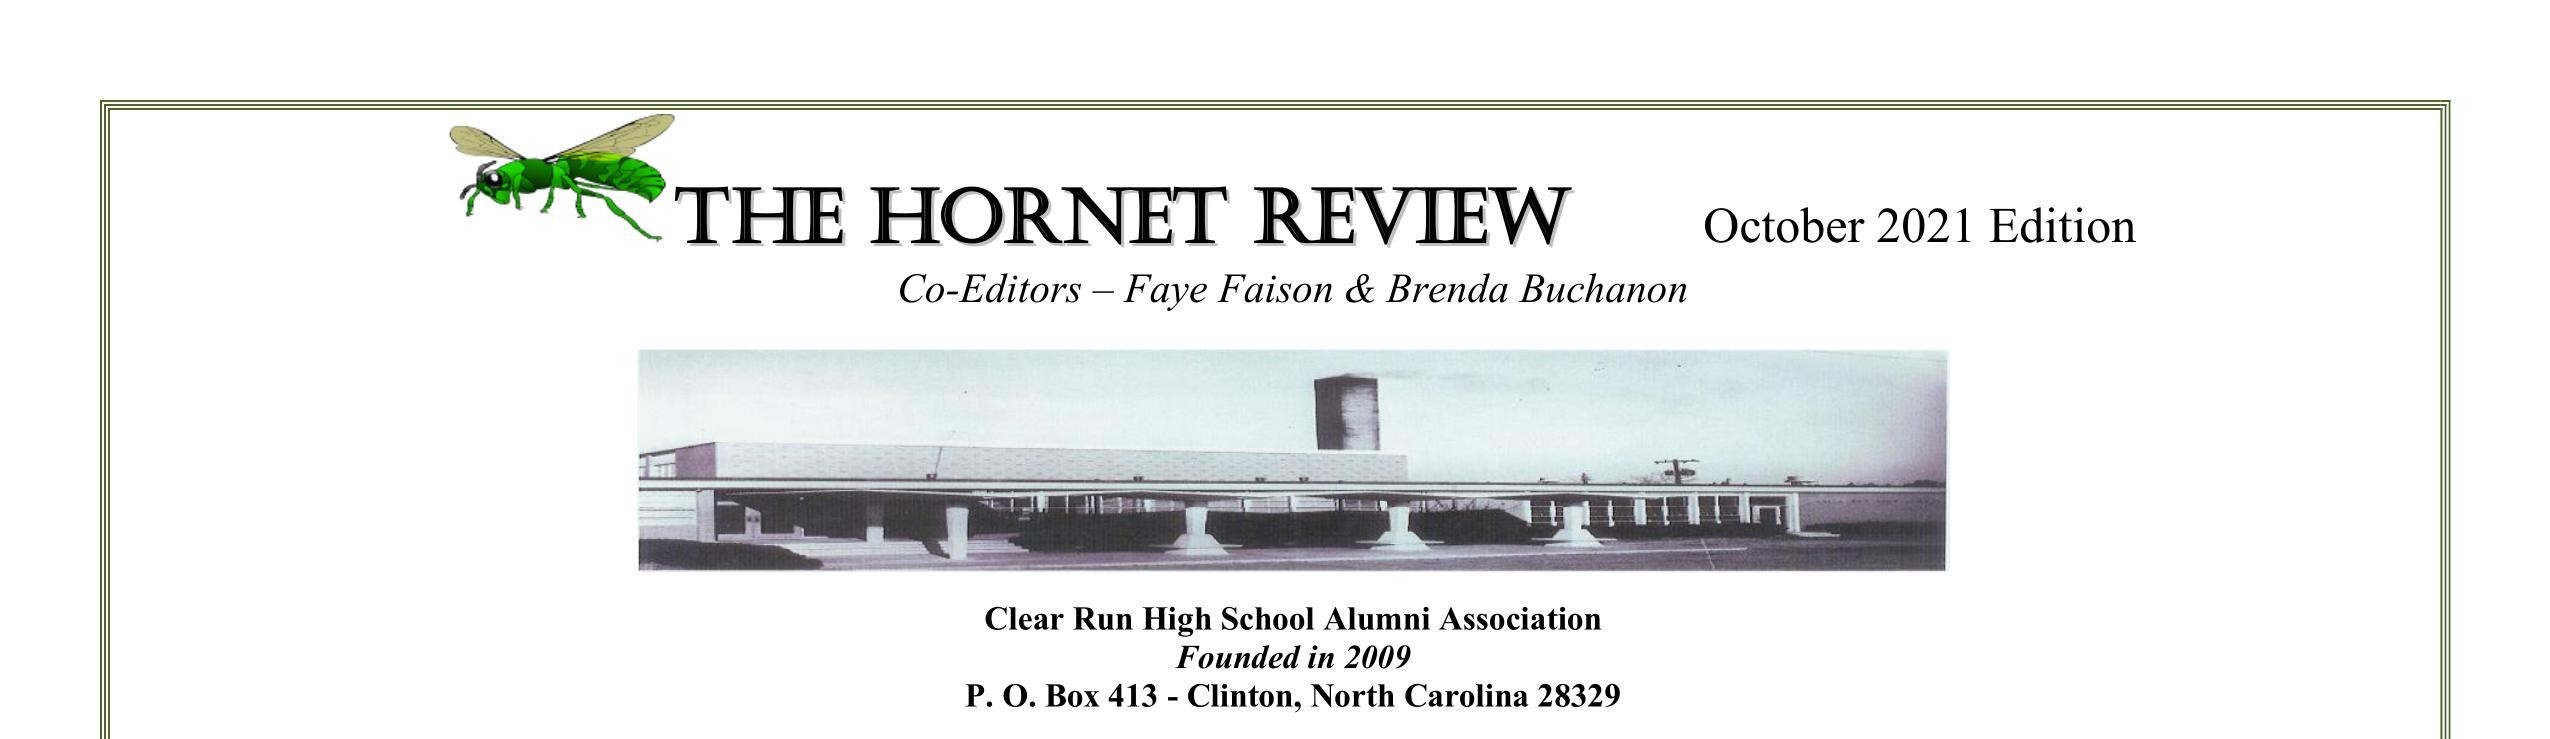 Header for the October 2021 Hornet Review. Co-editors Faye Faison and Brenda Buchanon. Clear Run High School Alumni Association founded in 2009. P.O. Box 413 Clinton, North Carolina 28329.